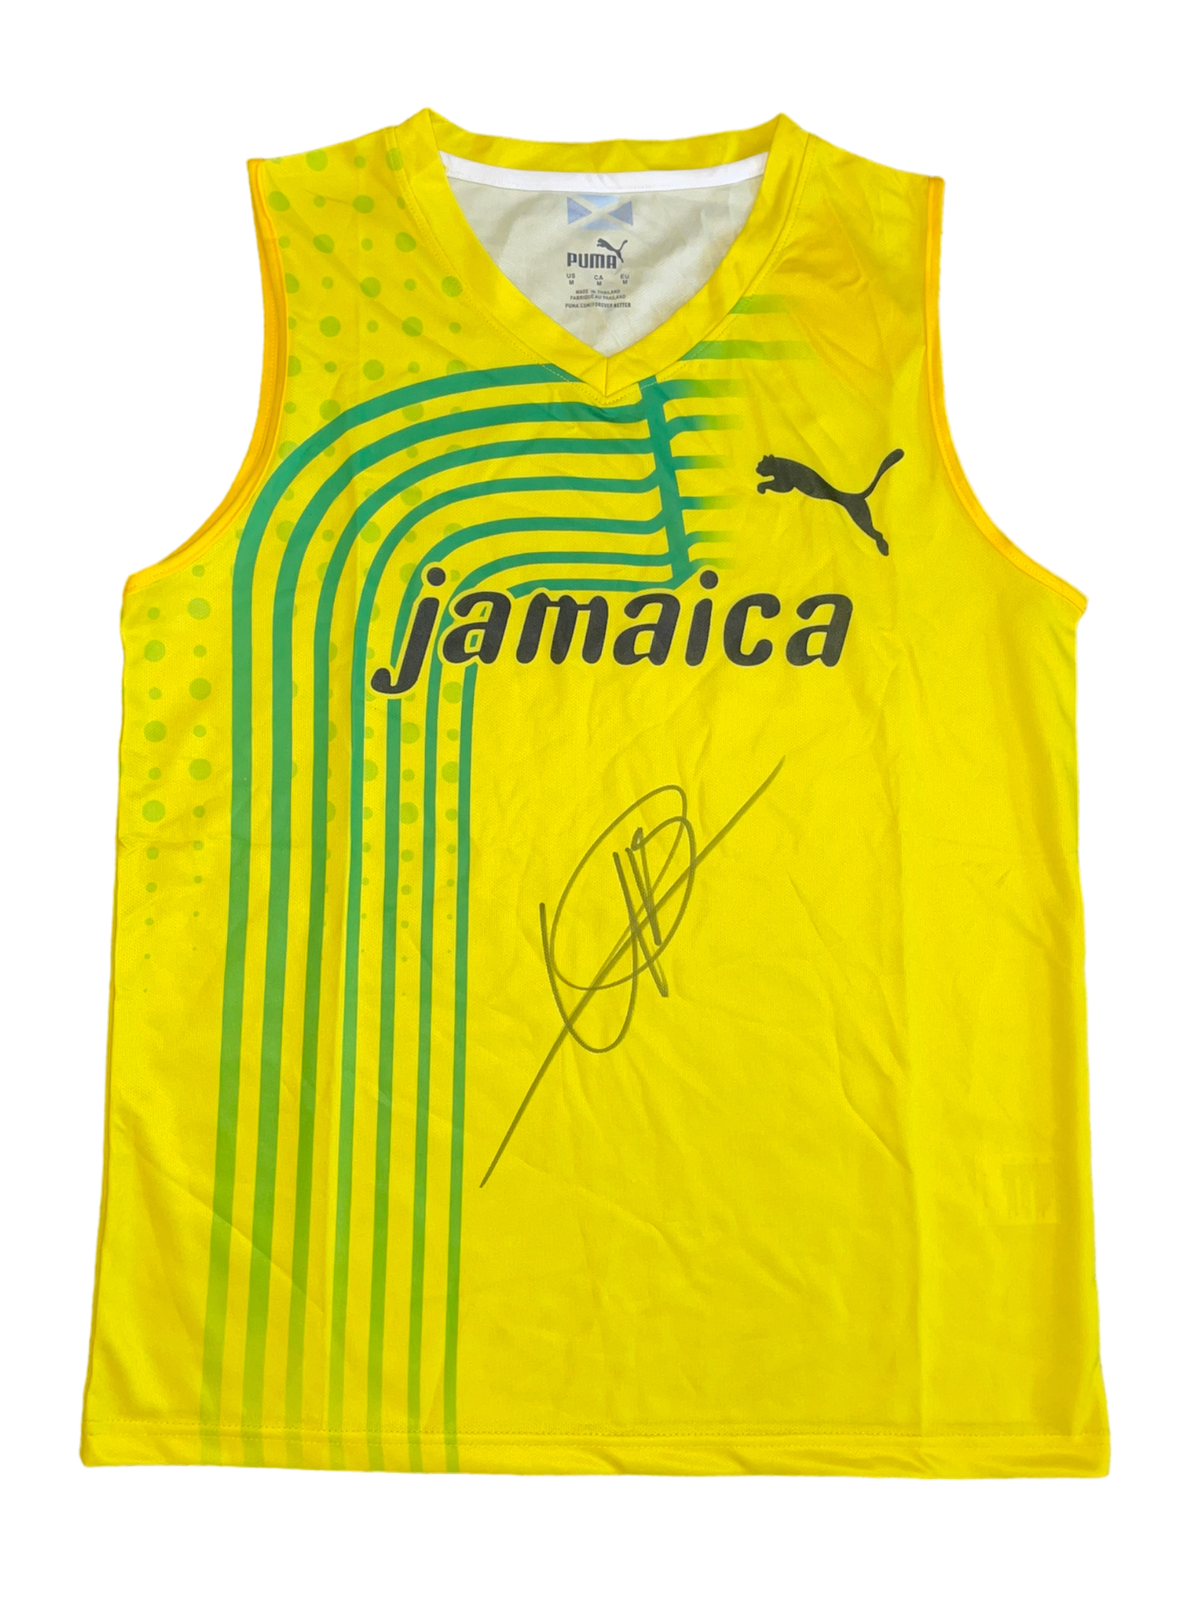 USAIN BOLT SIGNED JAMAICA RUNNING OLYMPICS 2008 VEST (AFTAL COA)